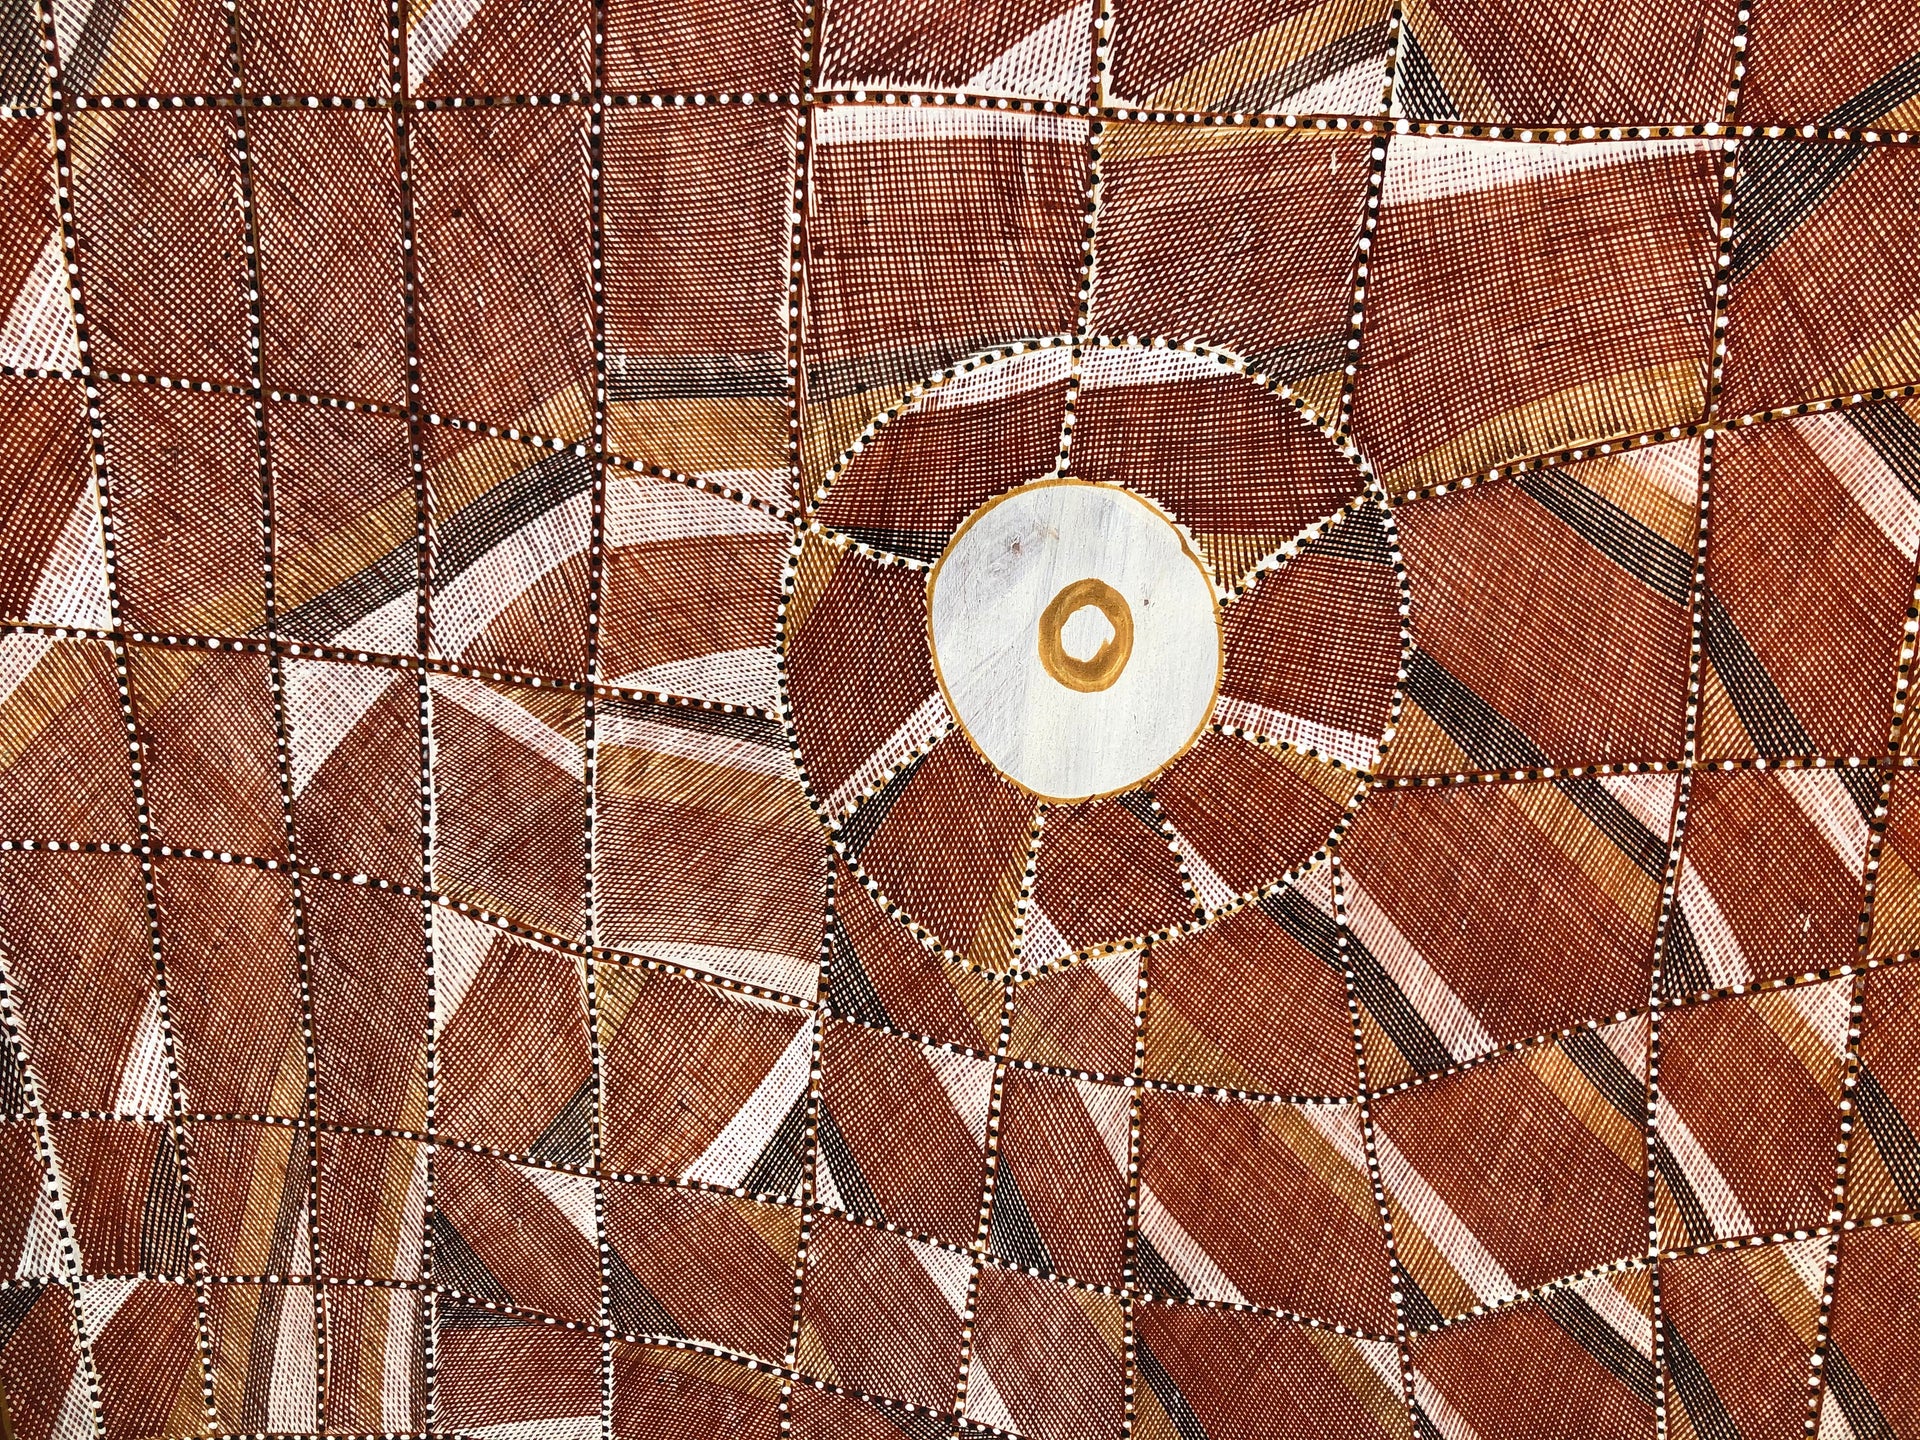 Fine Australian Bark Paintings-2020